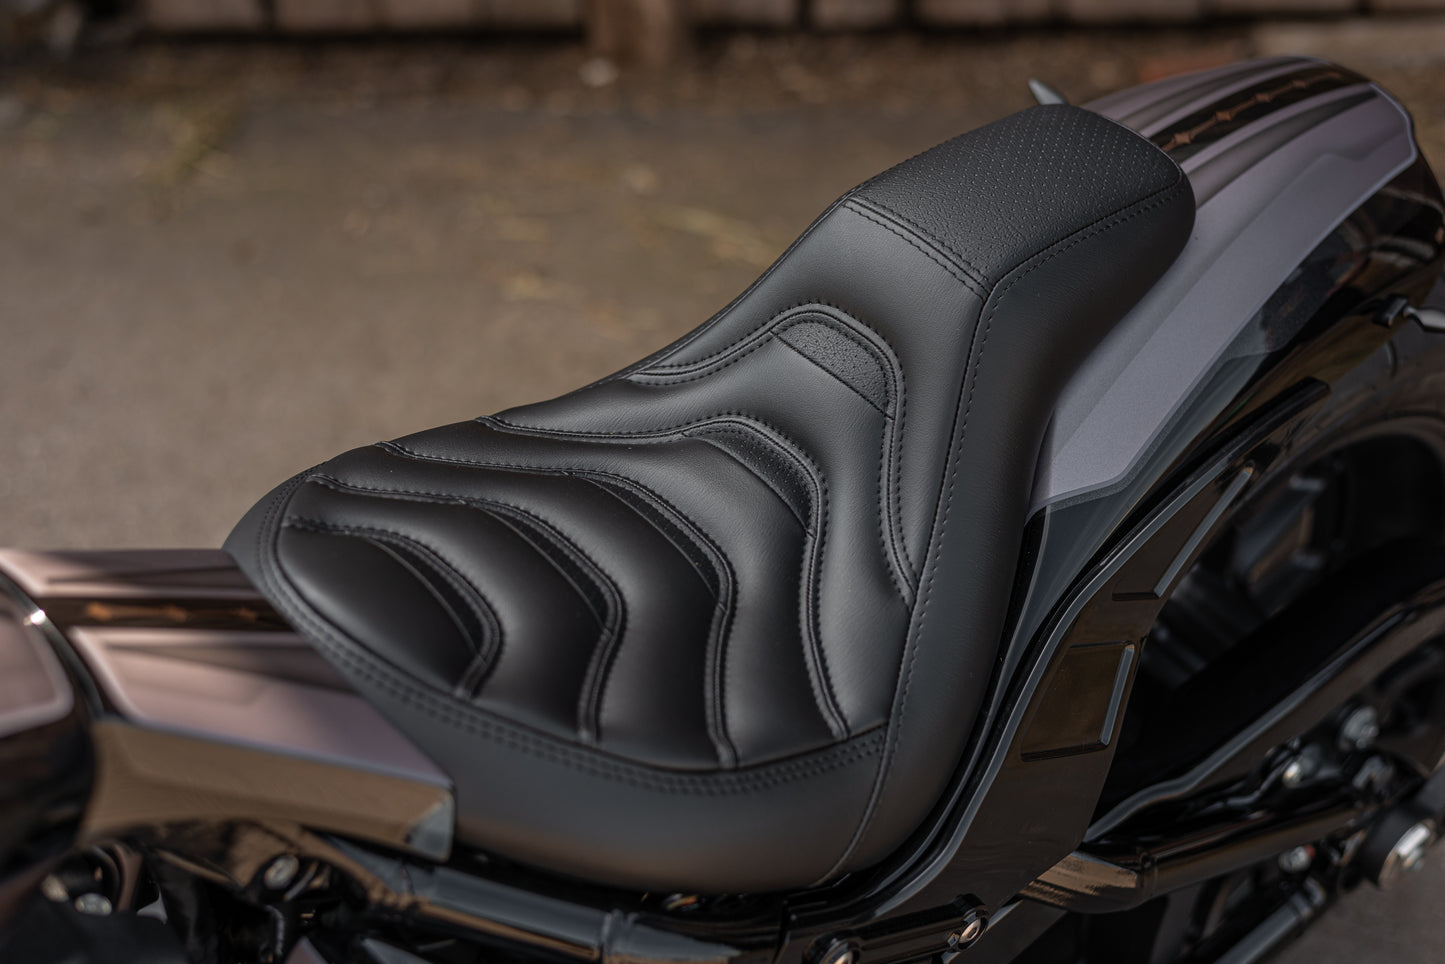 Zoomed Harley Davidson motorcycle with Killer Custom "Predator" seat